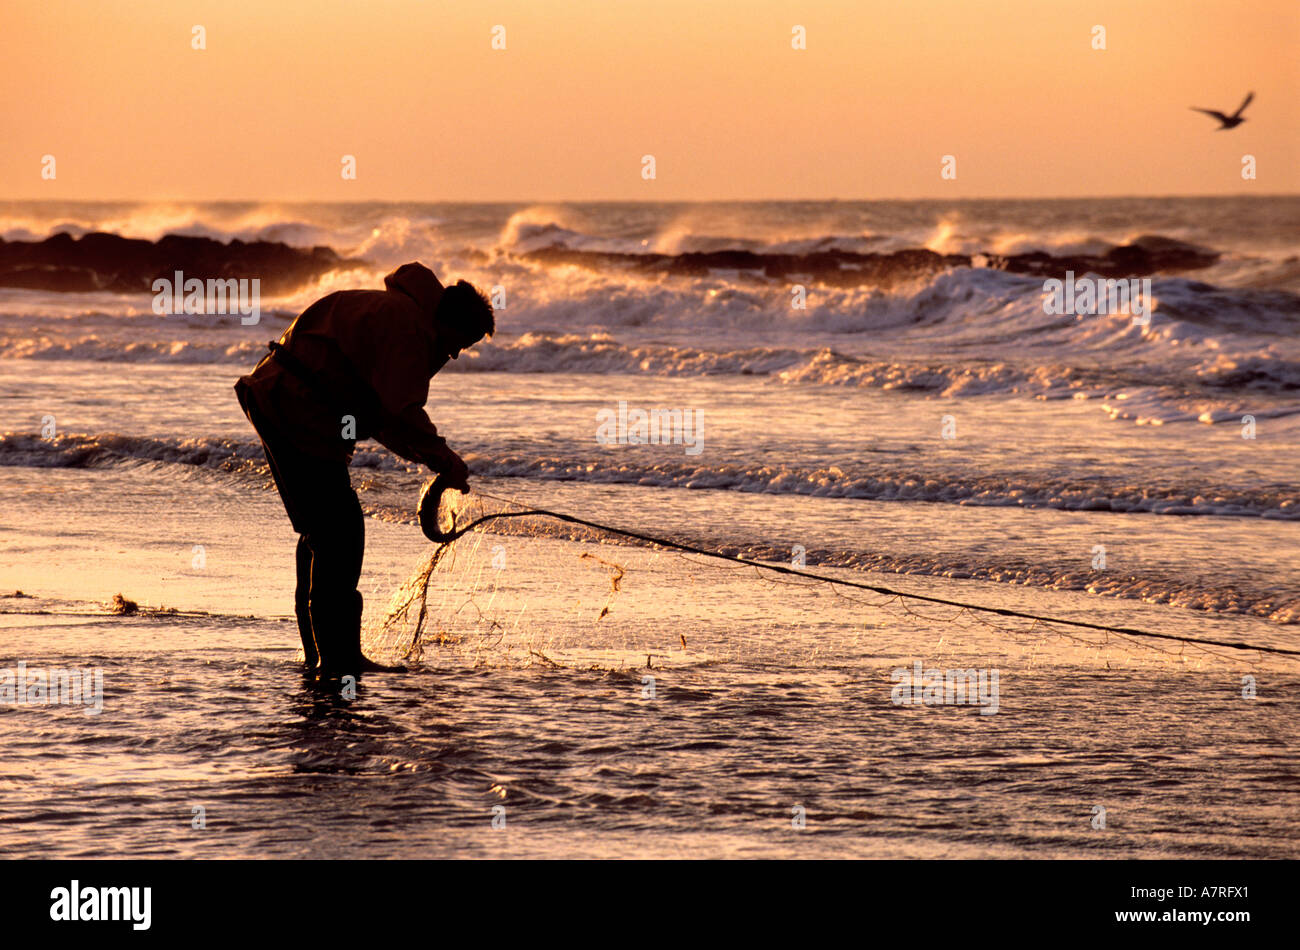 Belgium, West Flanders, Ostend (Oostende), fisherman on foot raising his net on the beach Stock Photo